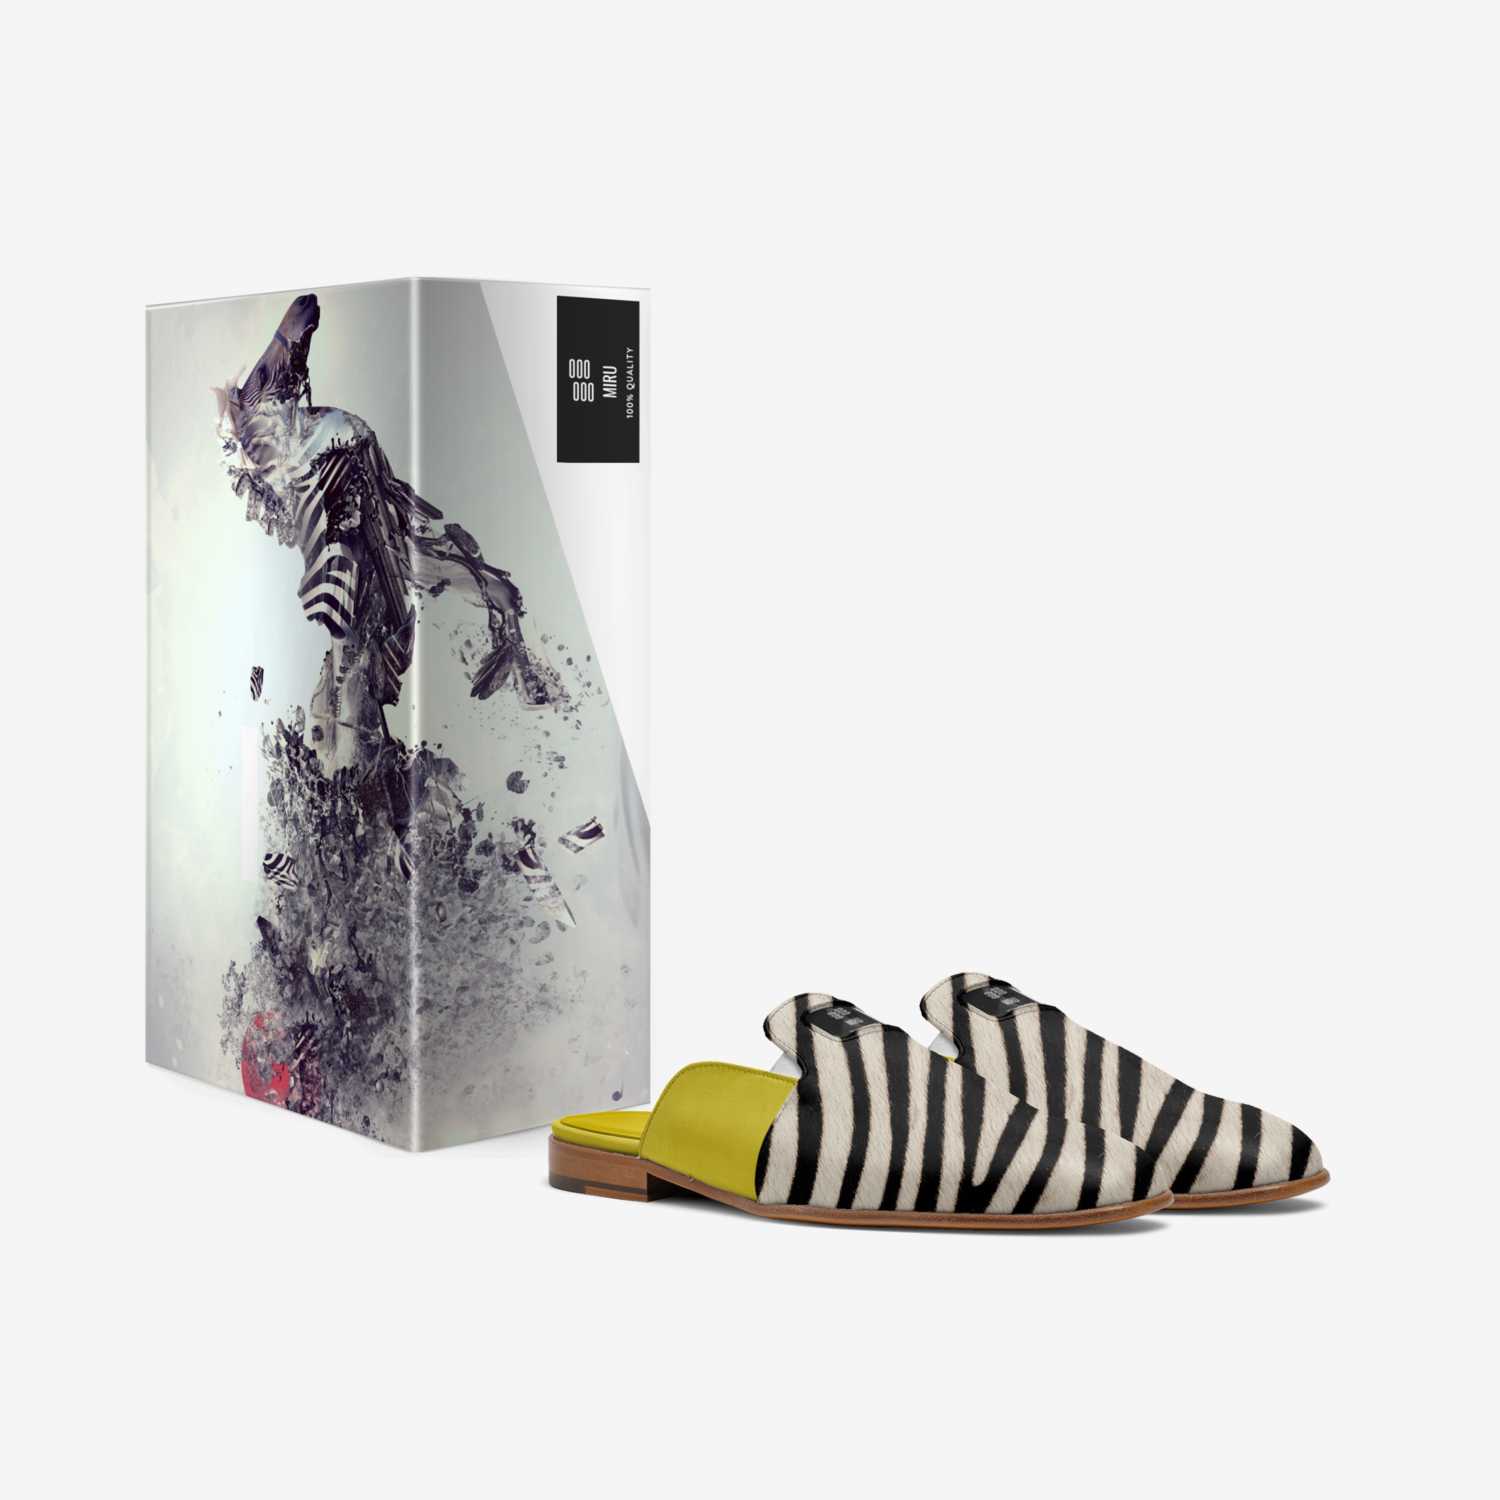 MIRU custom made in Italy shoes by Shawnkyle Thomas-brooks | Box view